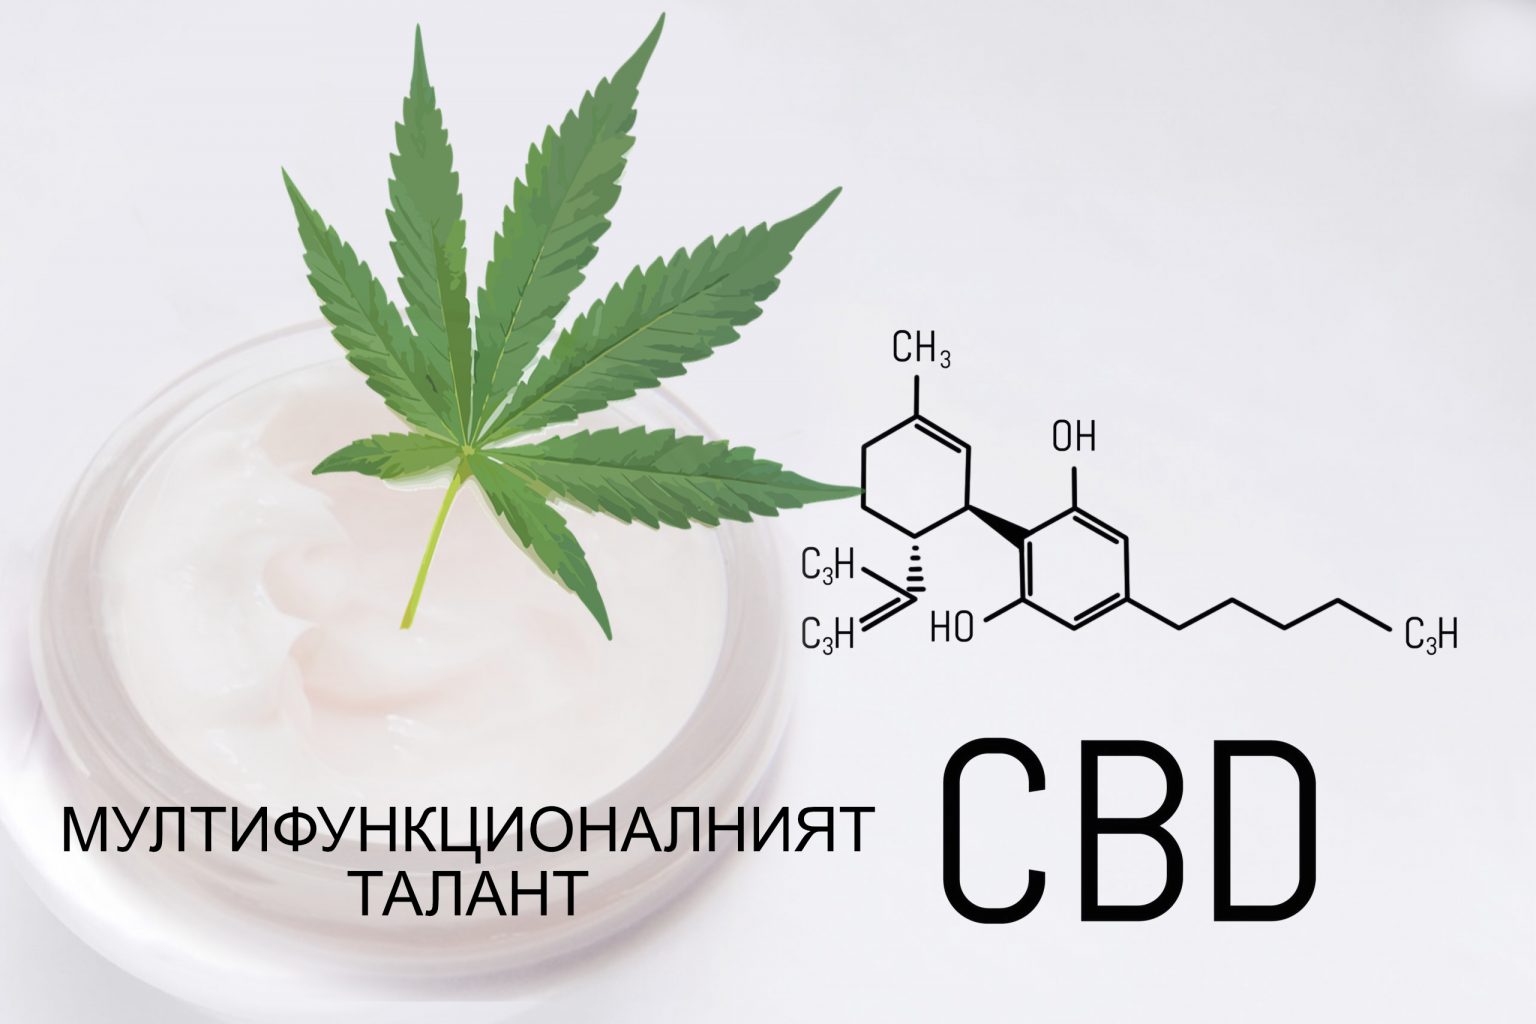 Molecular structure medical chemistry formula cannabis of the formula CBD, green leaf hemp on a white background. Natural cosmetics. CBD cannabidiol topicals concept